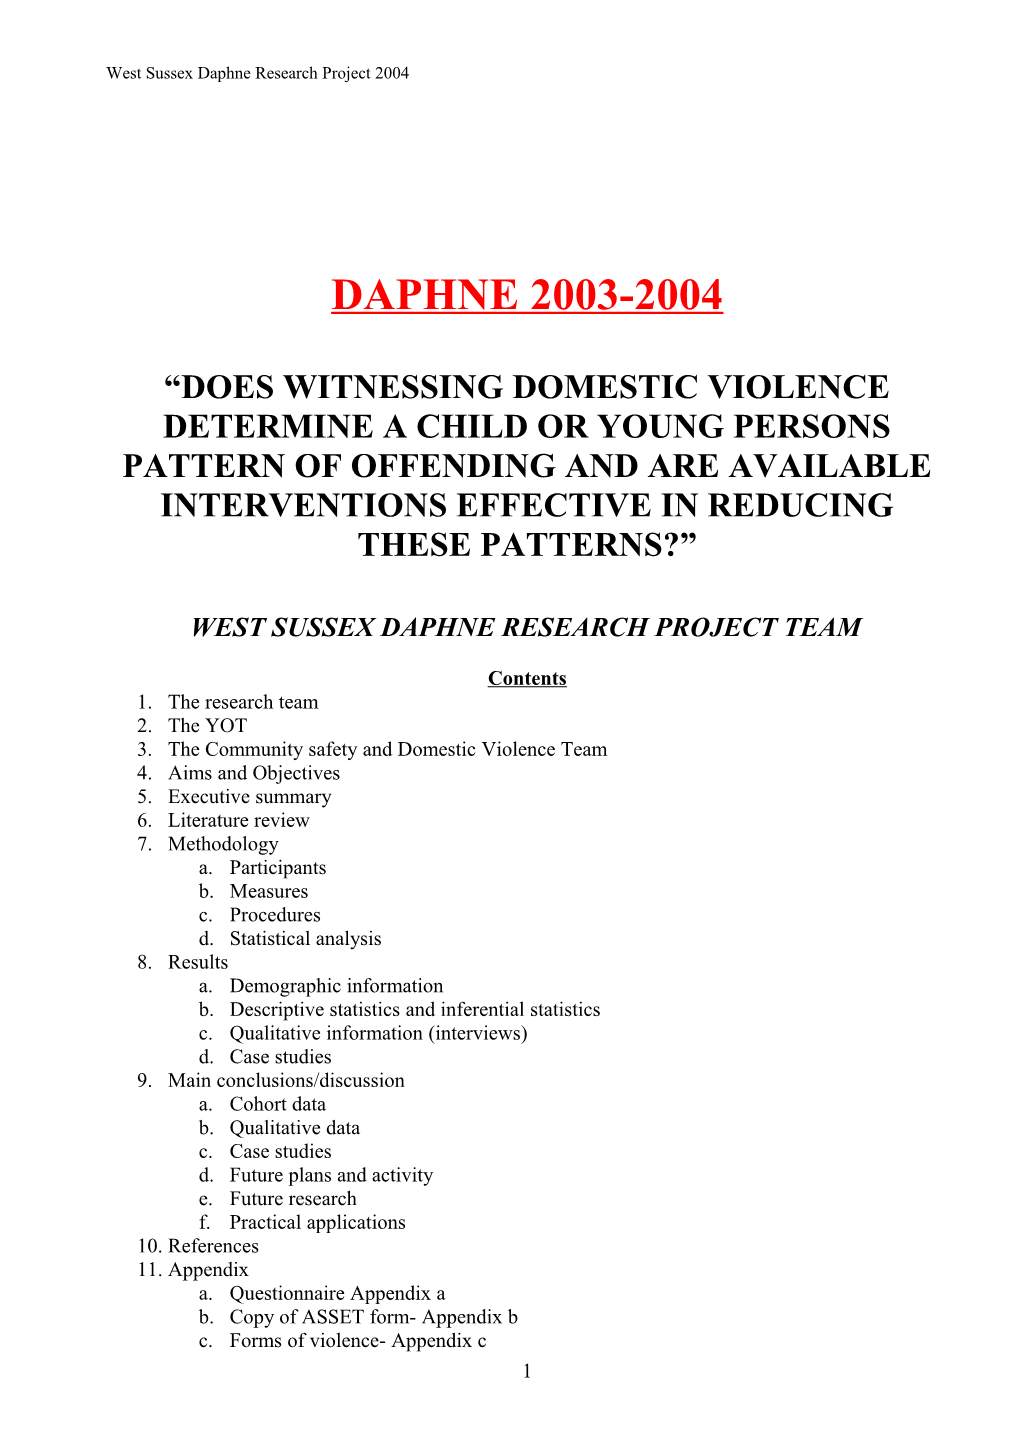 Draft Report- DAPHNE 2003-2004